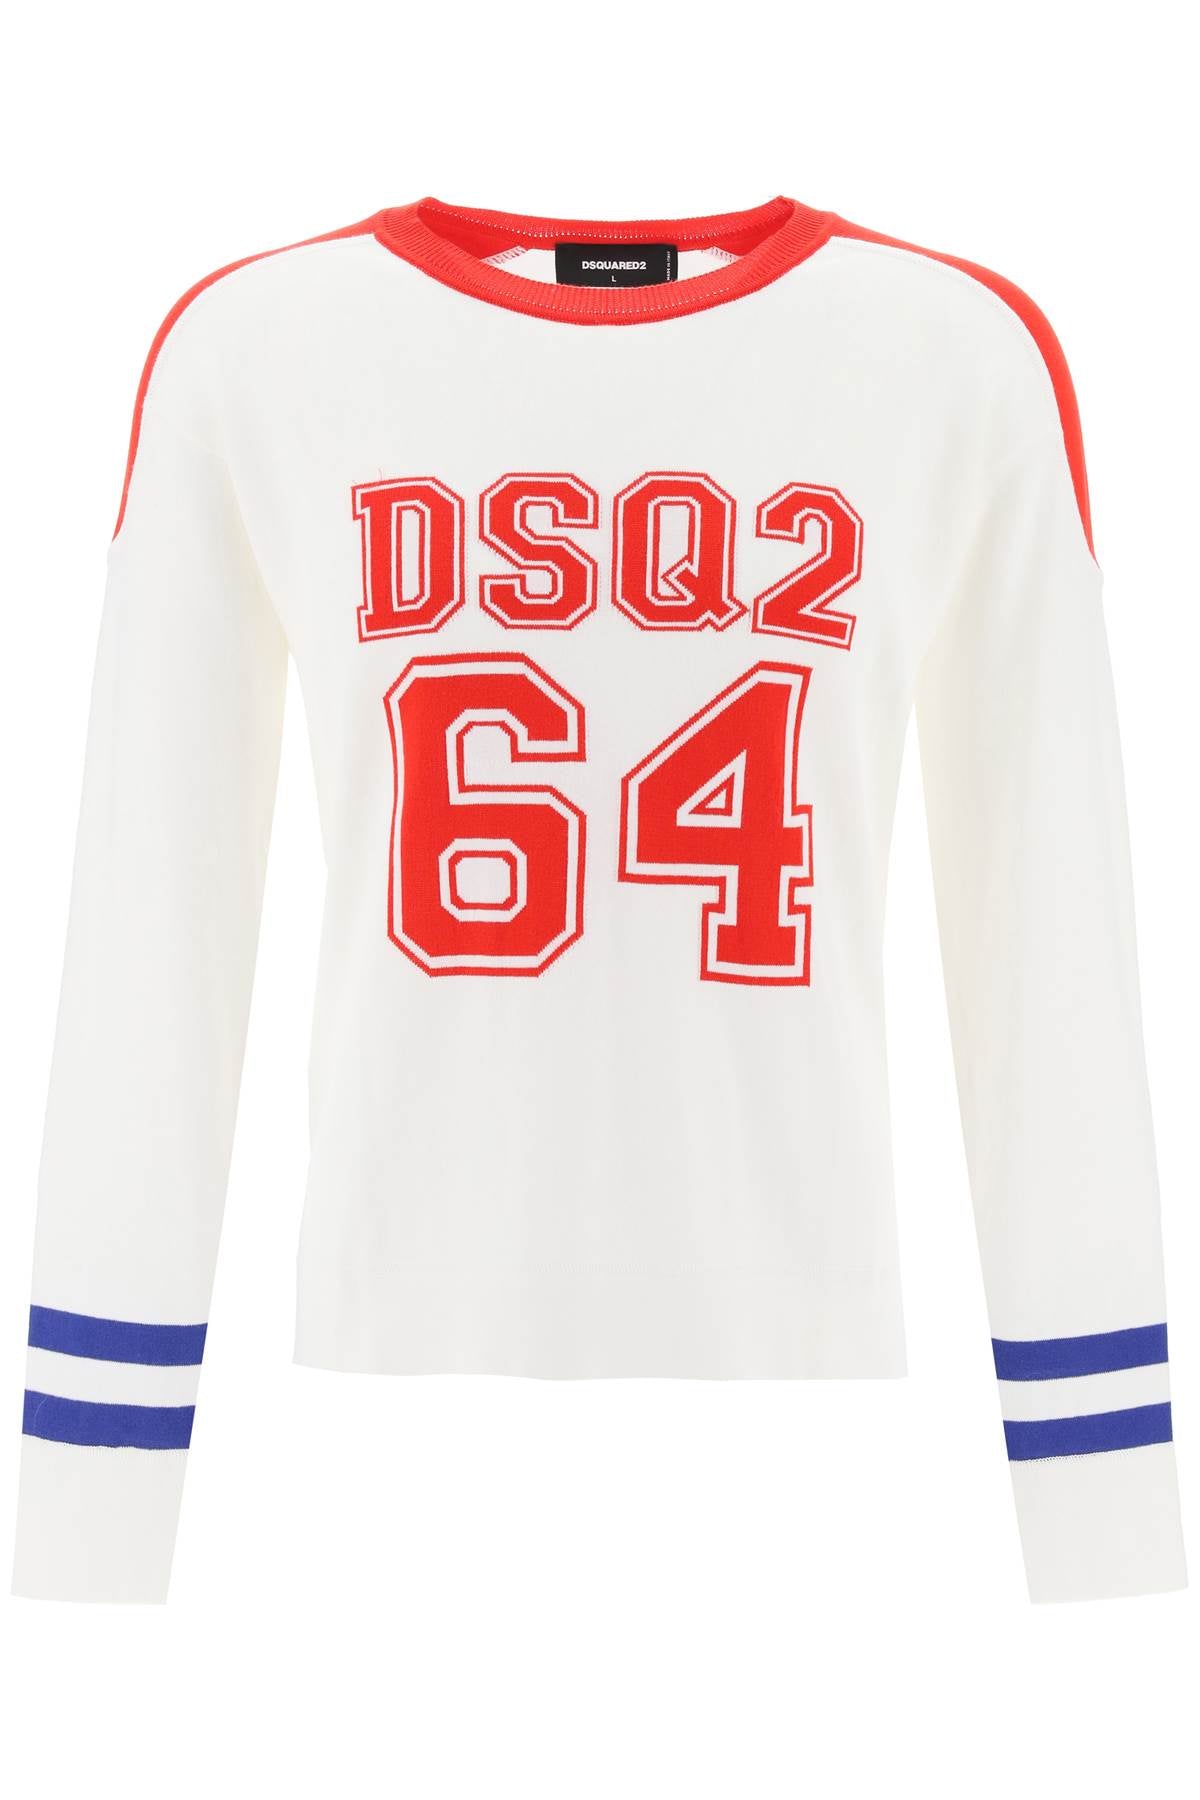 Dsquared2 dsq2 64 football sweater-0